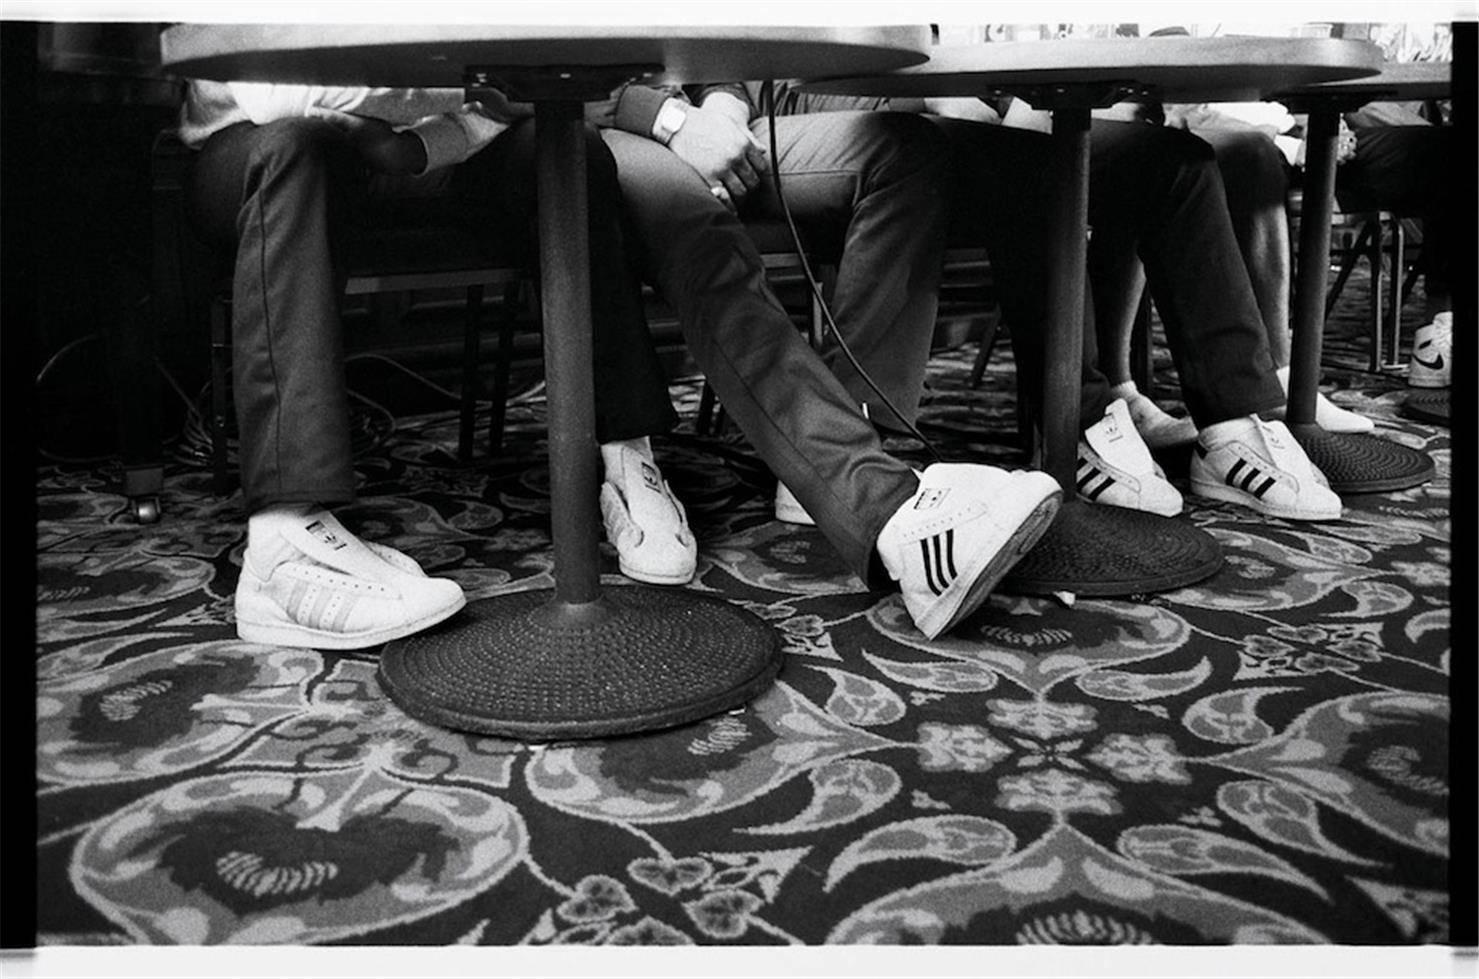 Josh Cheuse Black and White Photograph - Run DMC, Adidas